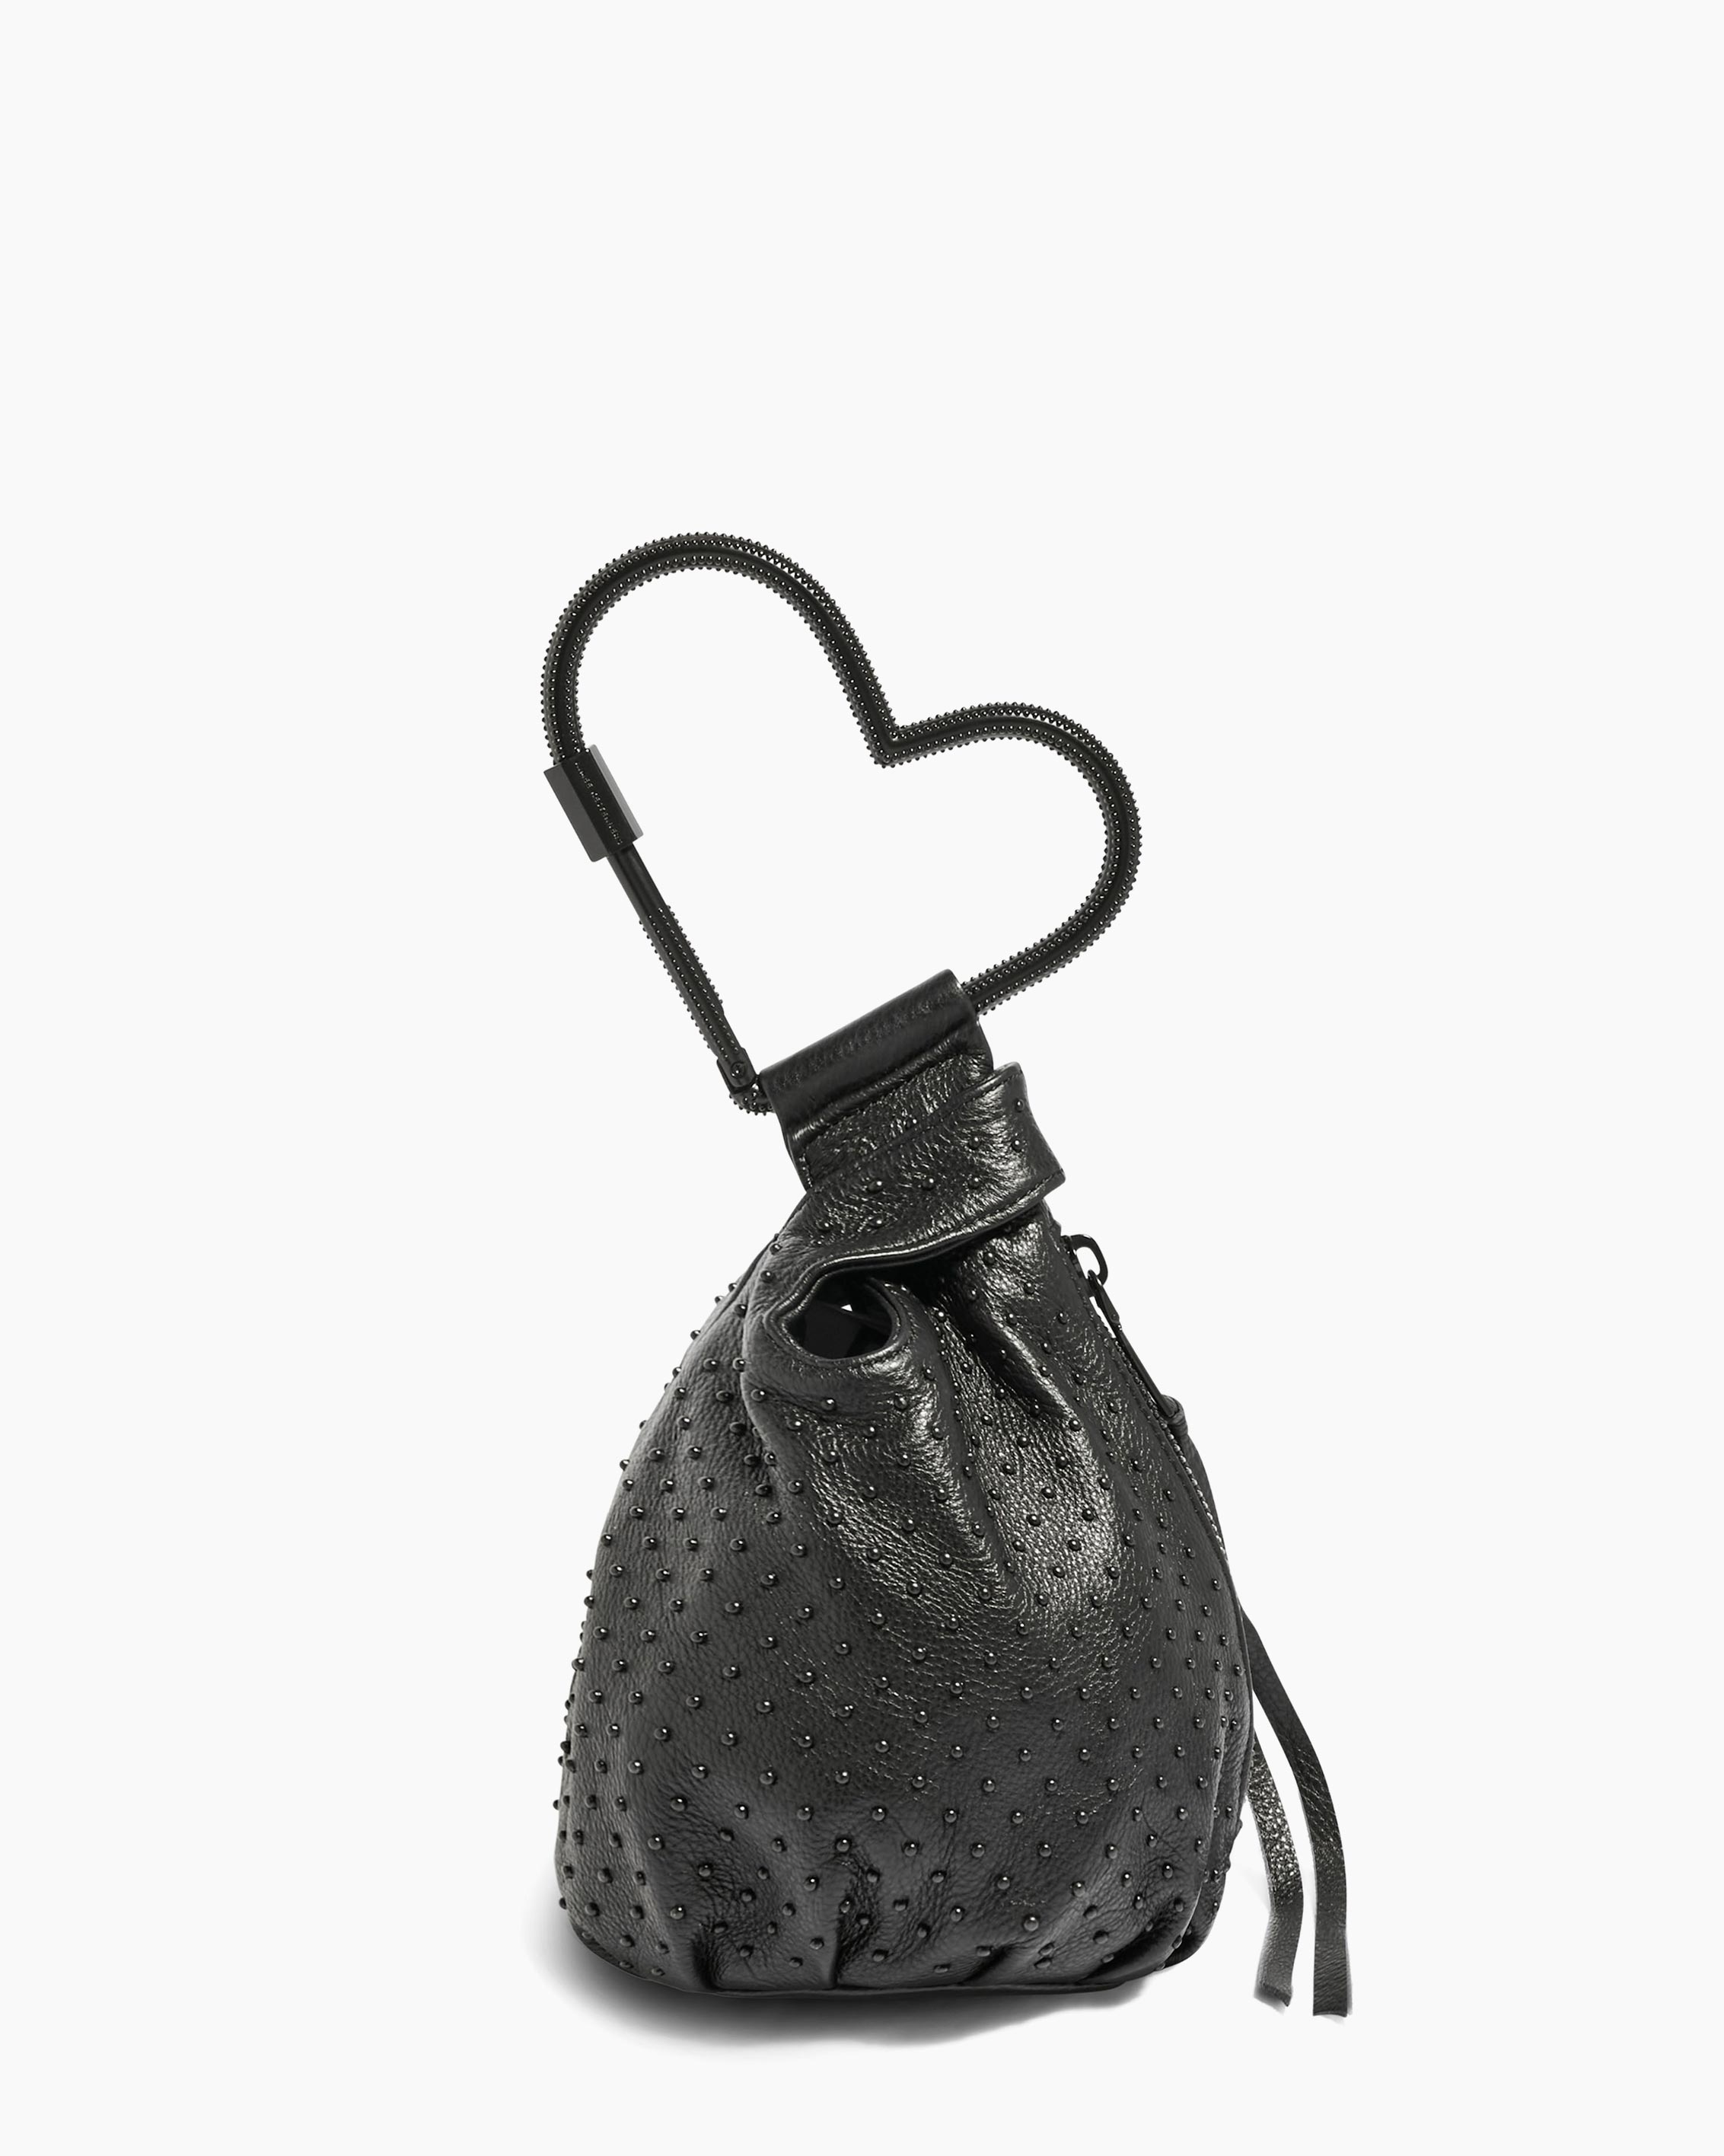 Stylish Black Heart Bag from Apollo Box